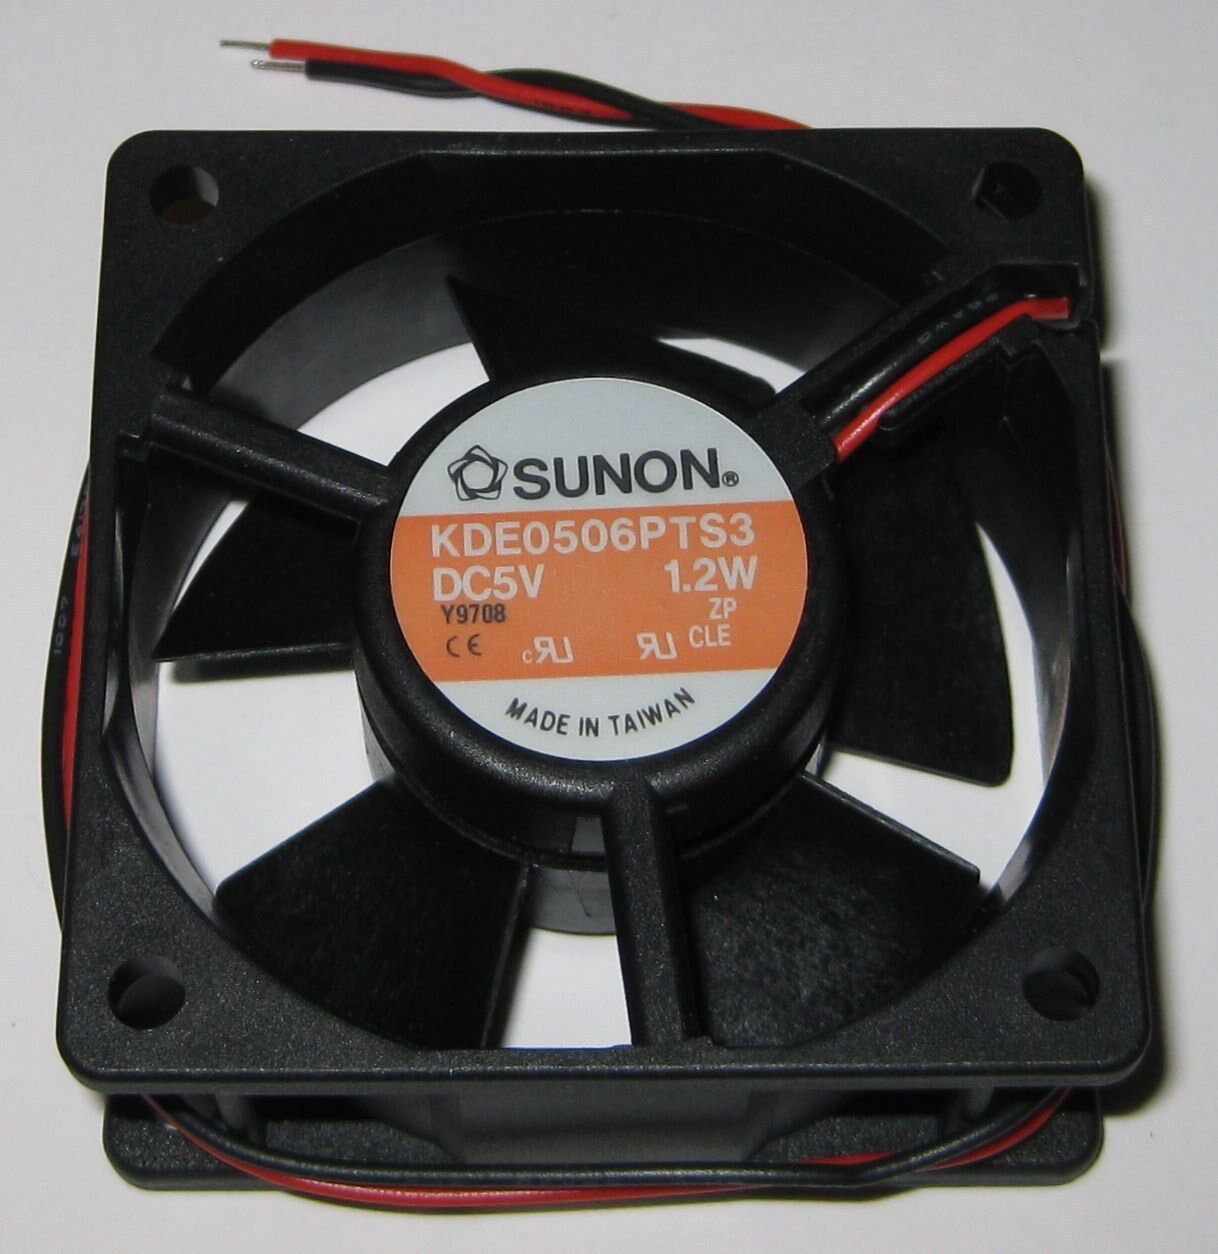 Sunon 60 mm Quiet Fan w/ Sleeve Bearing - 5 V - 16 CFM - 3300 RPM - KDE0506PTS3